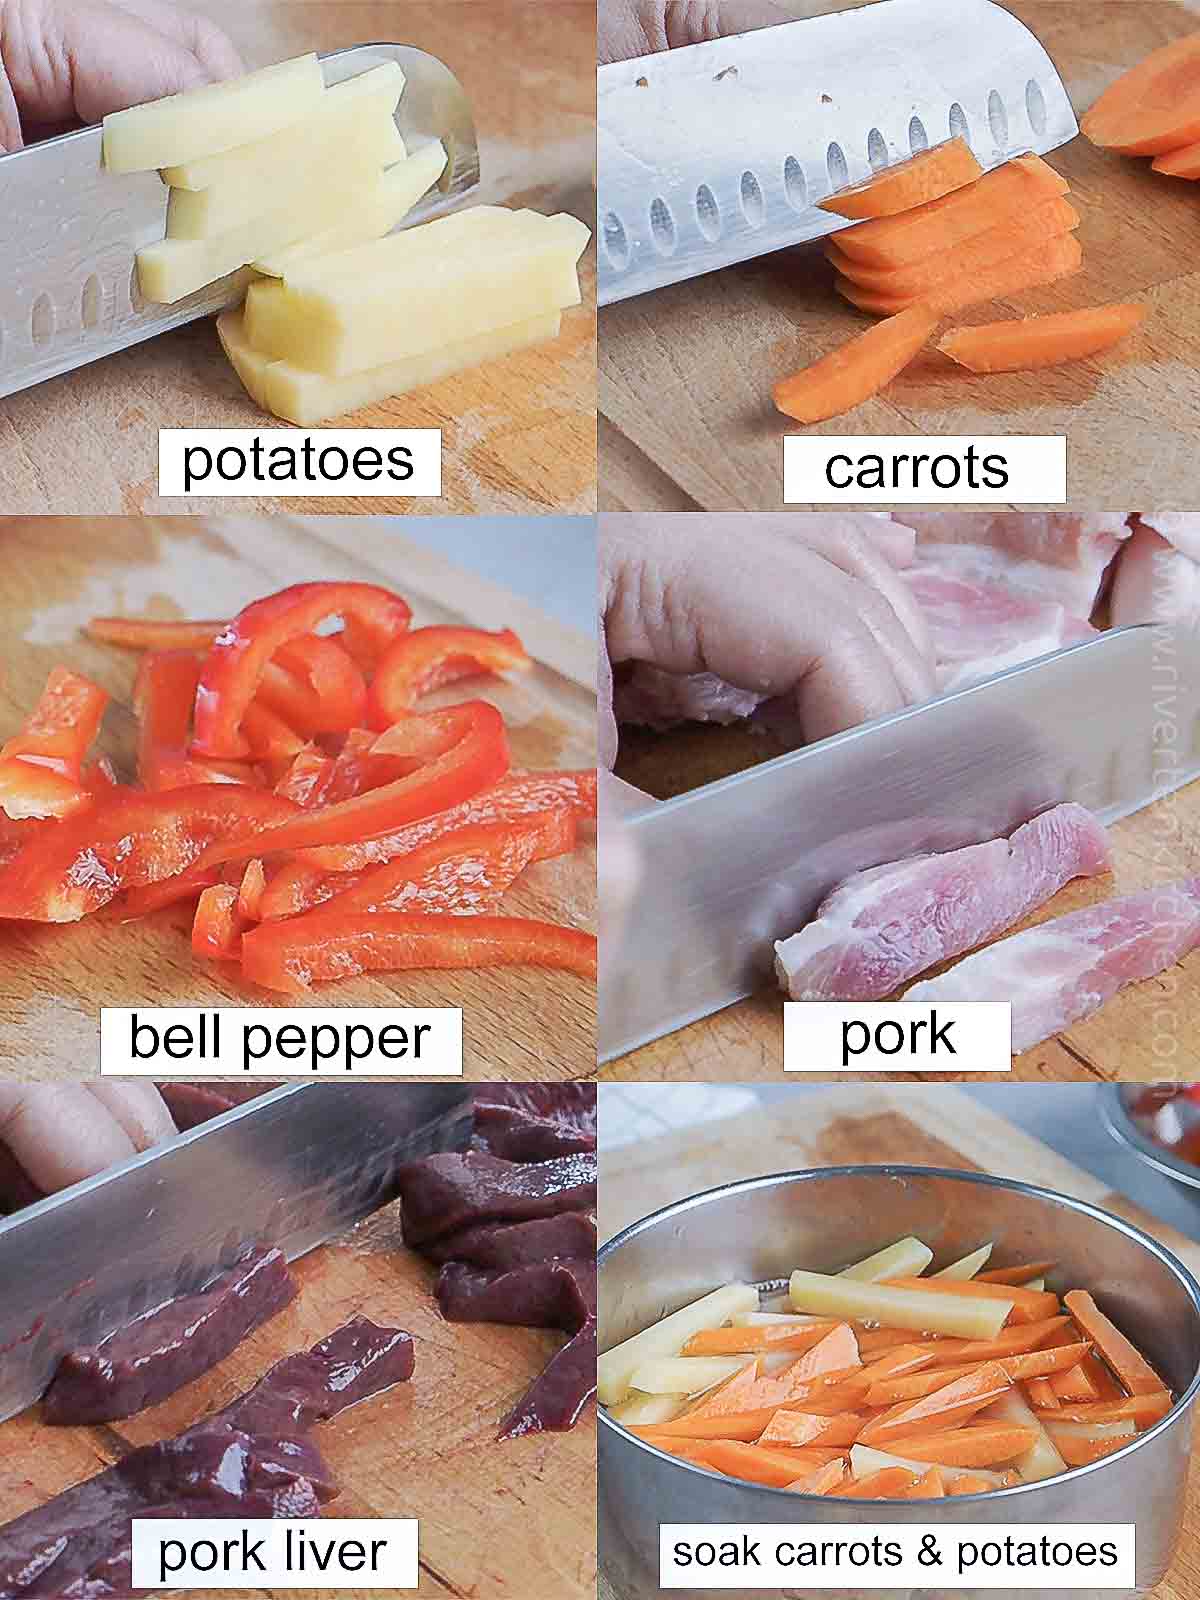 carrots, potatoes, bell pepper, pork and liver